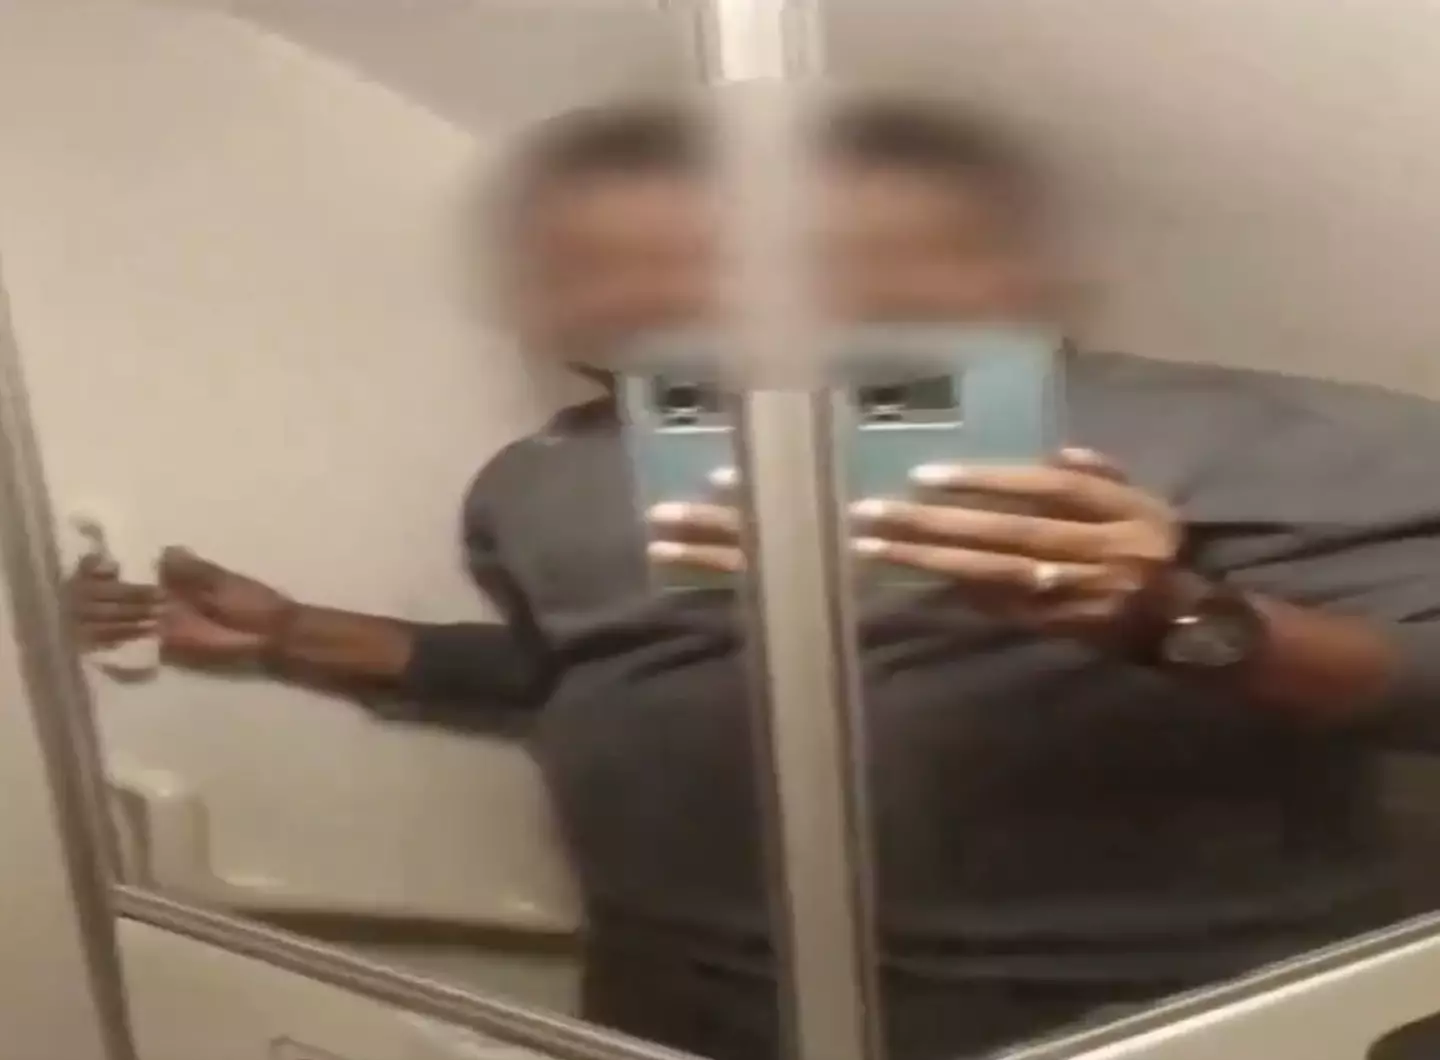 The passenger was left stuck in the plane's bathroom.